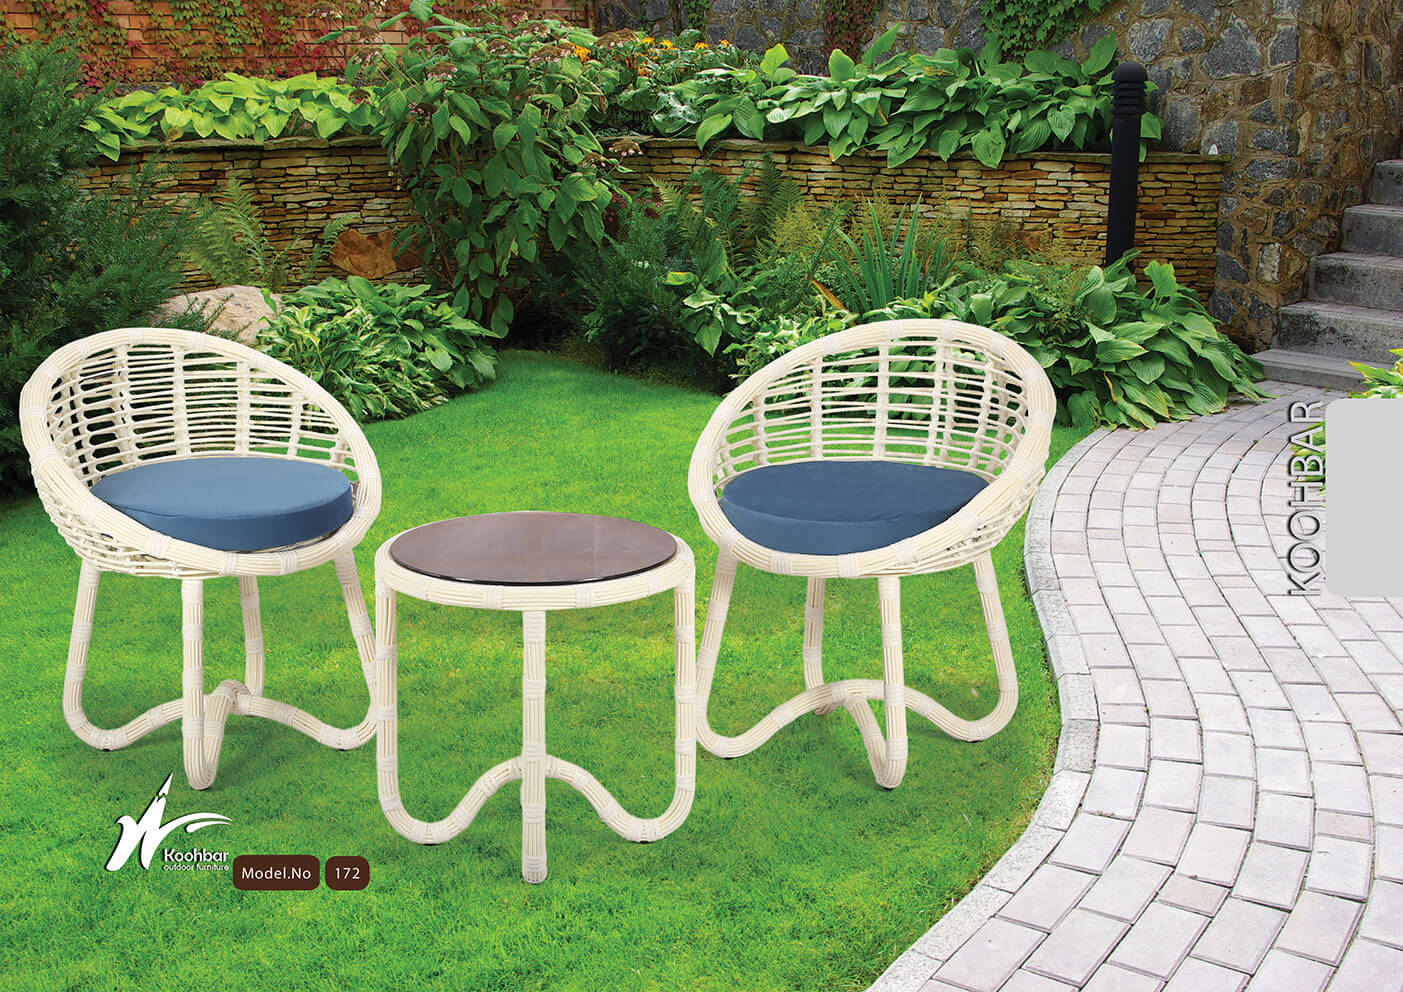 kohbar patio conversation sets 172 model0 - ست میز صندلی حصیری فضای باز کوهبر مدل ۱۷۲ -  - patio-conversation-sets